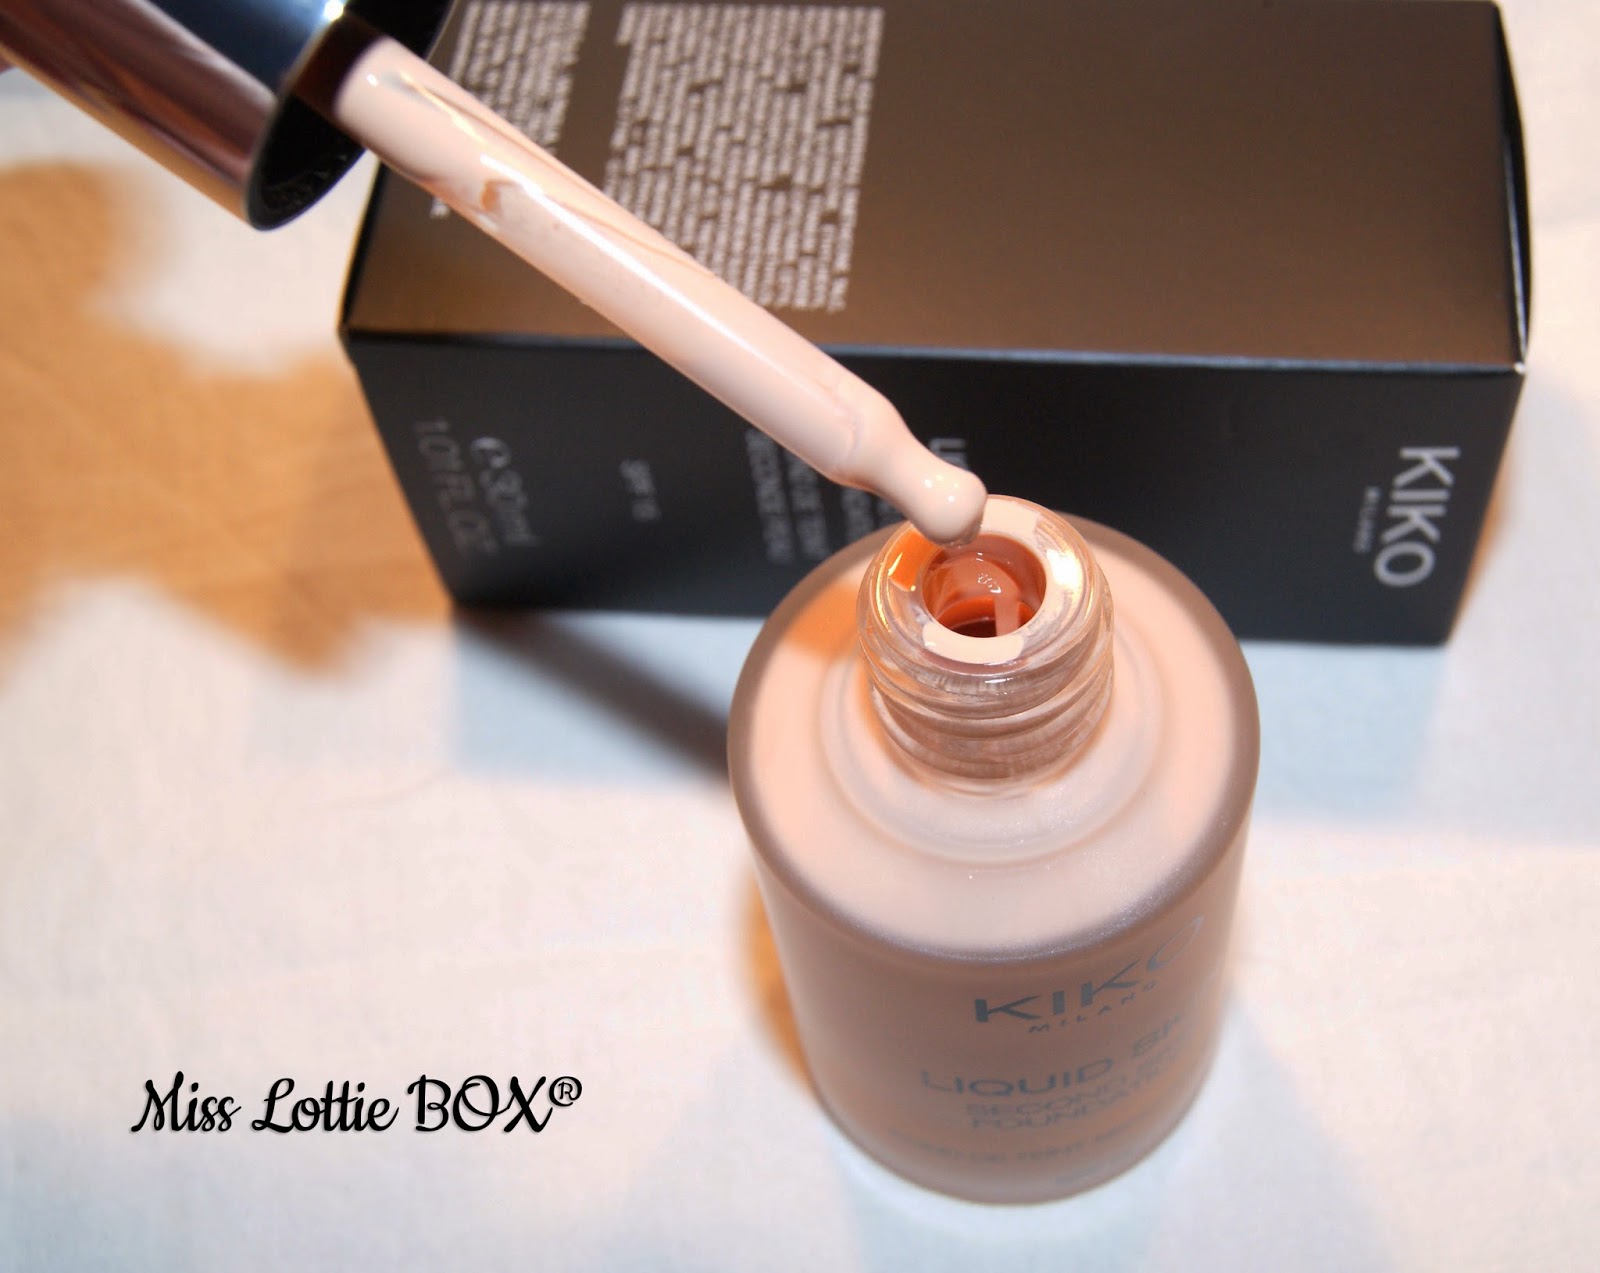 Liquid Skin de KiKo® (Review)